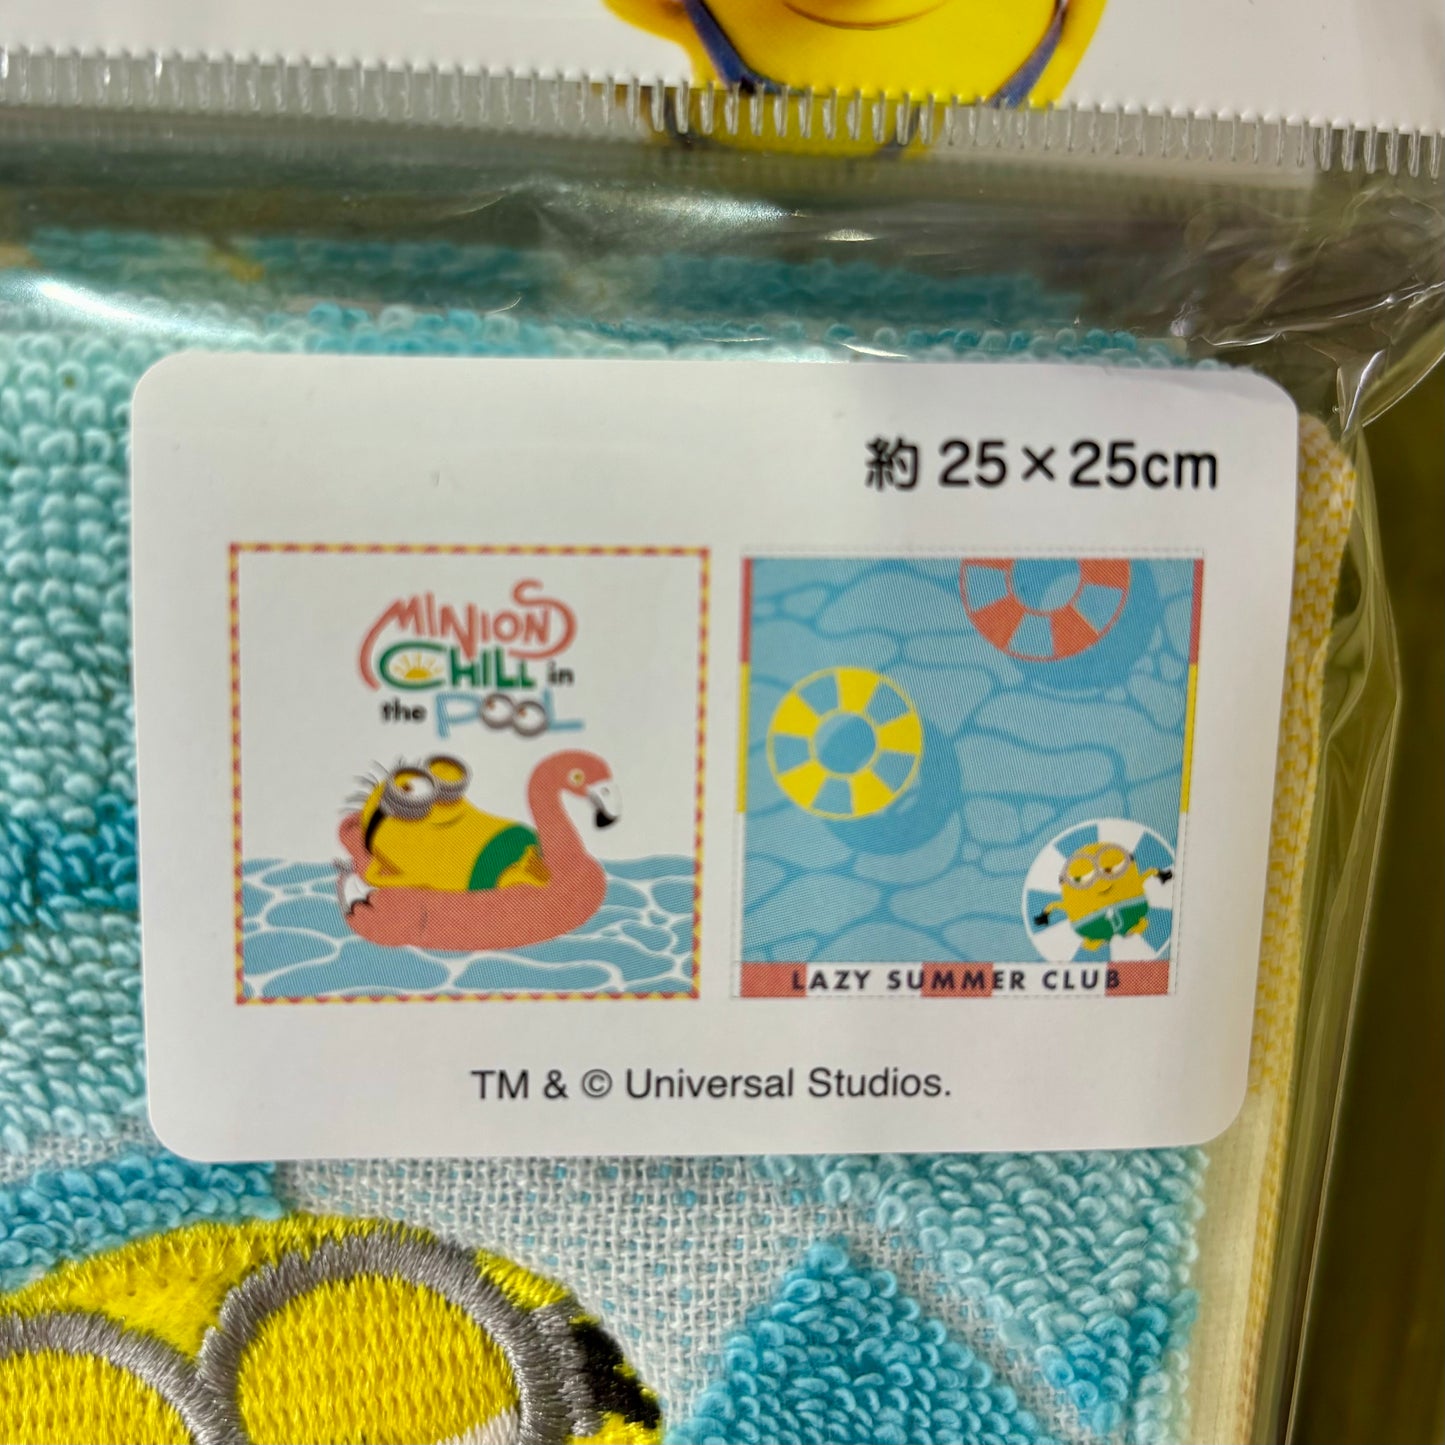 【Order】USJ Minions Chill in the Pool - Towel